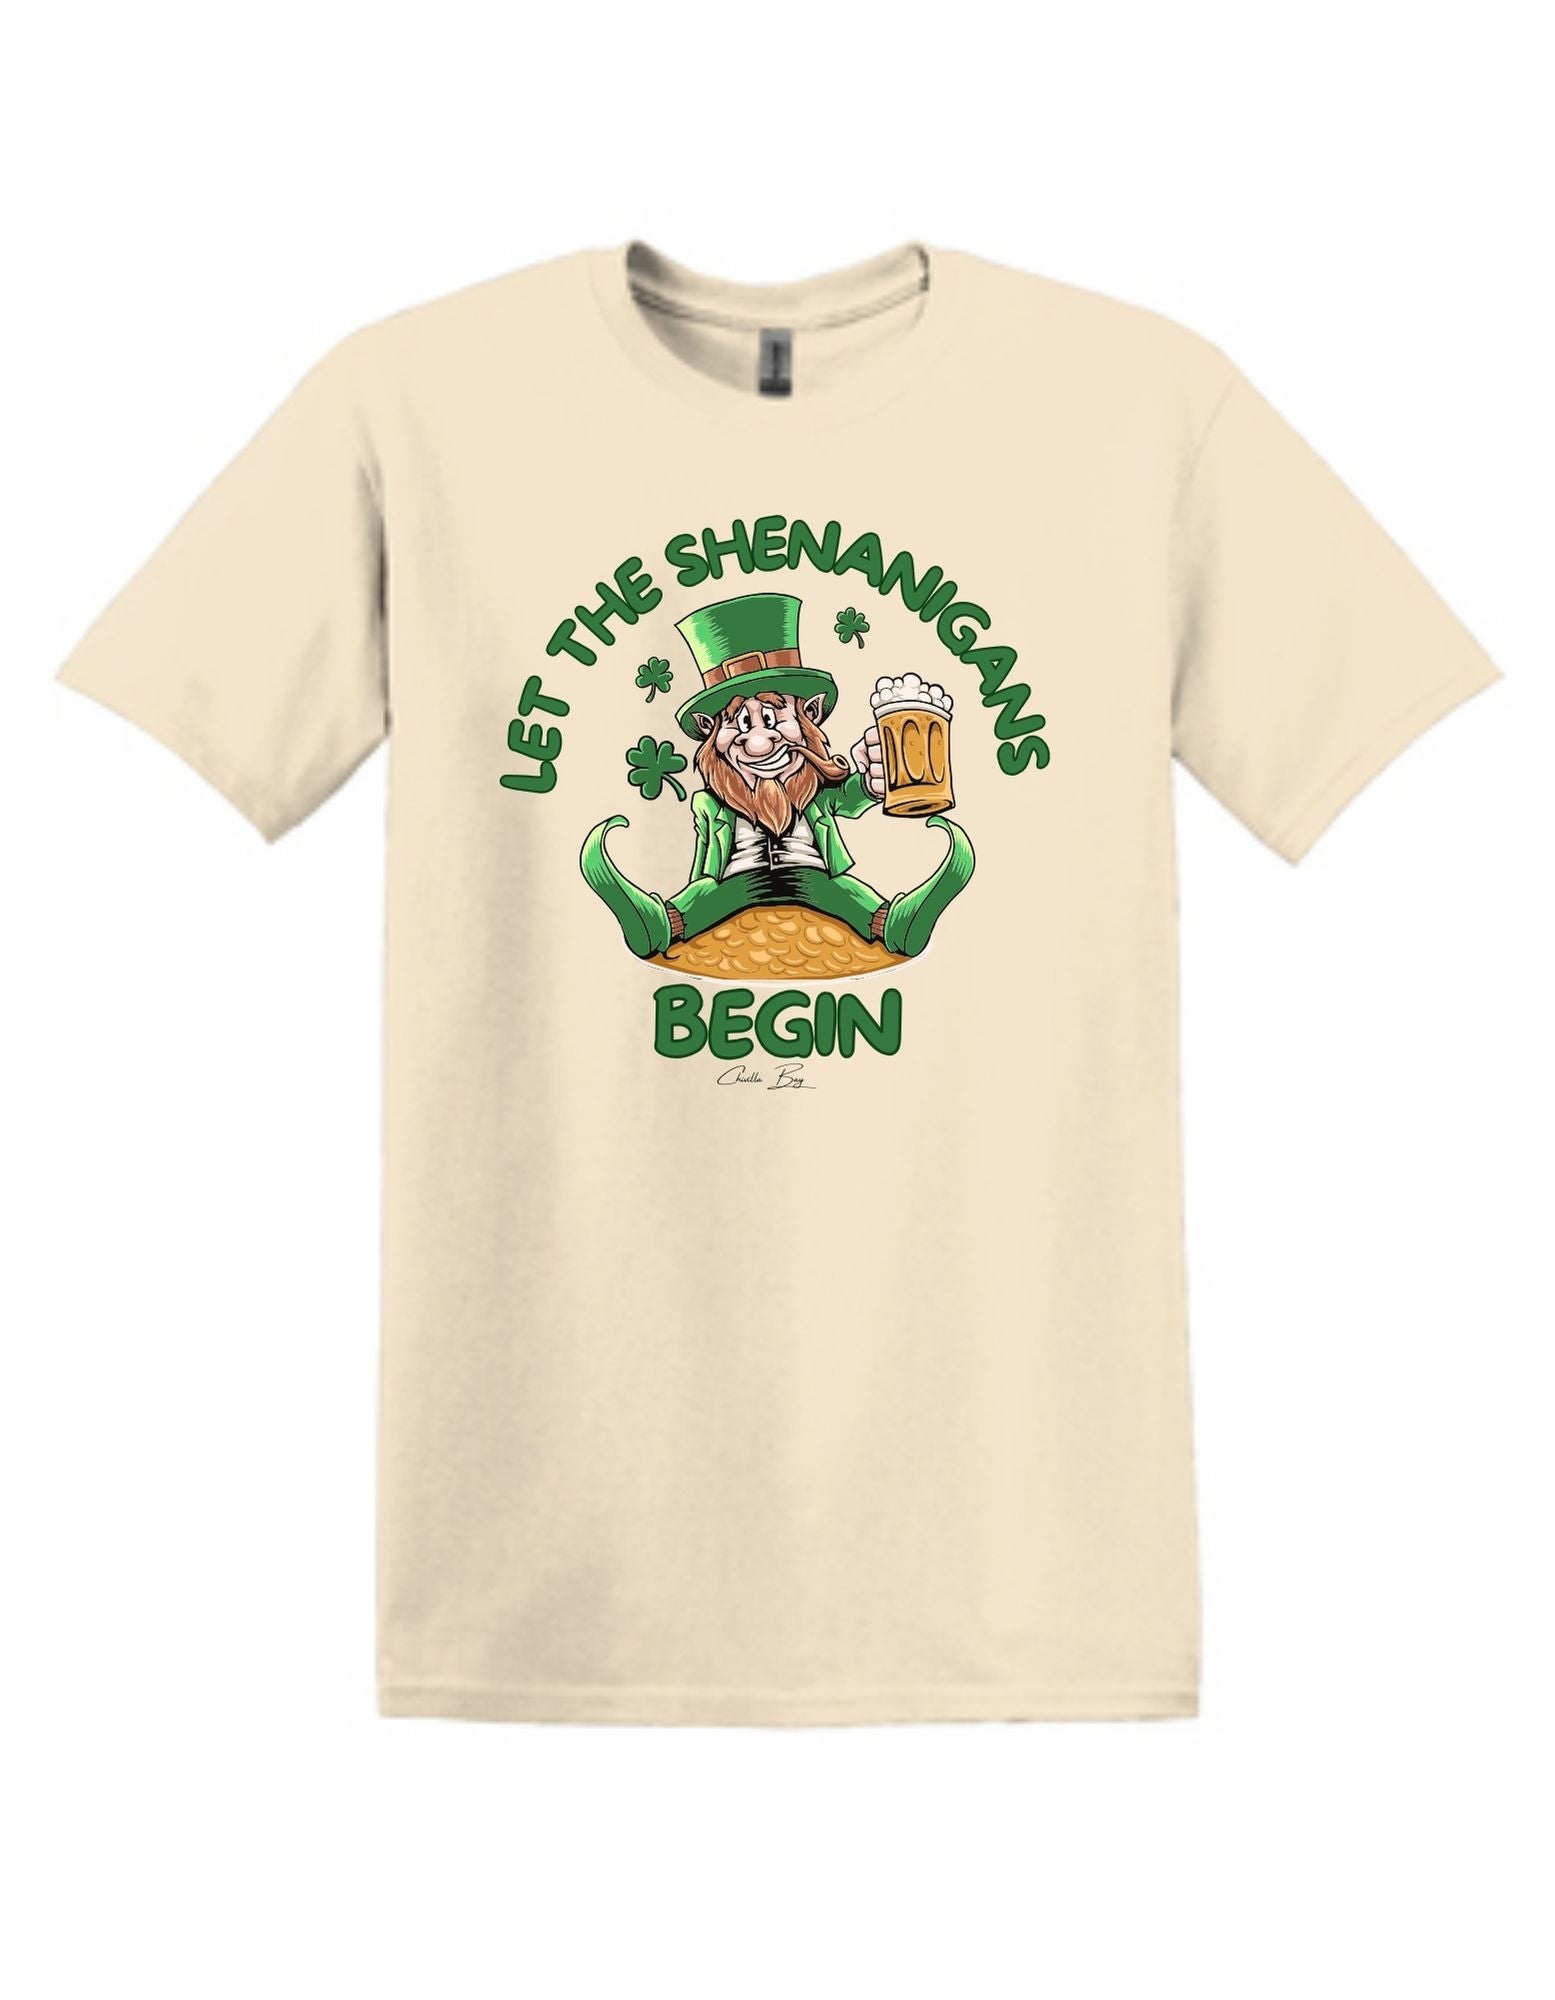 Let the Shenanigans Begin St Patrick's Day T-shirt